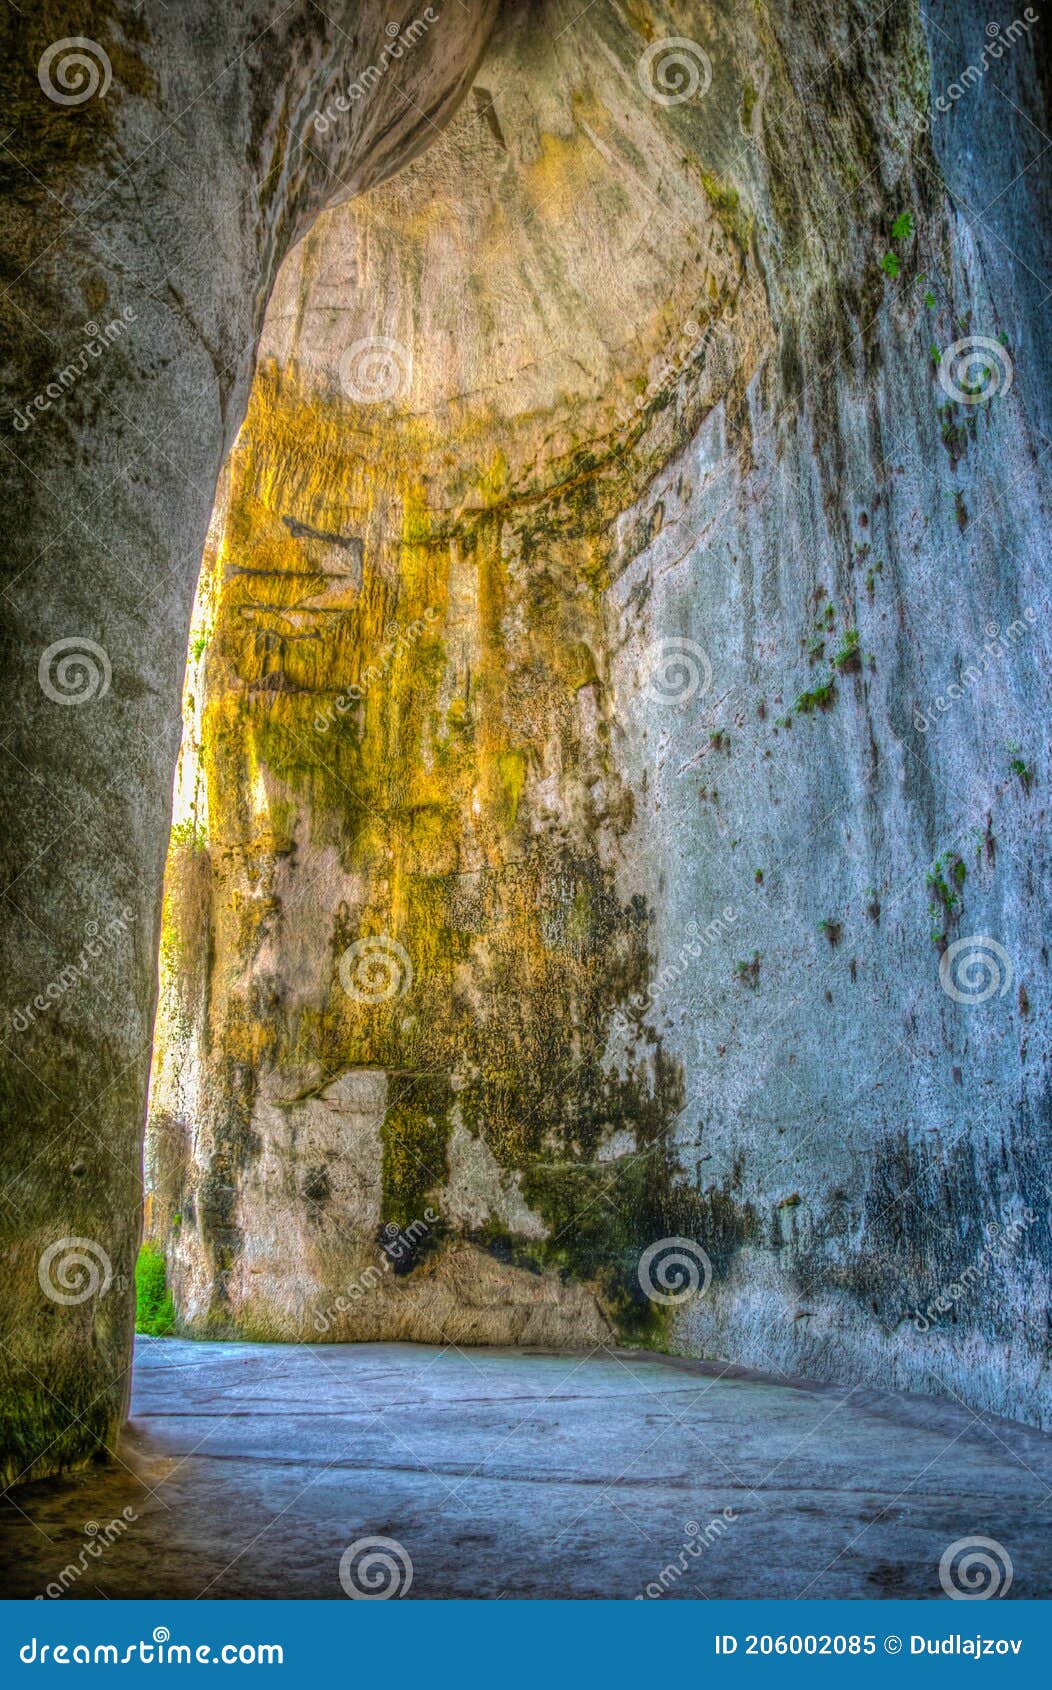 orecchio di dionisio cave in the neapolis archaeological park in syracuse, sicily, italy